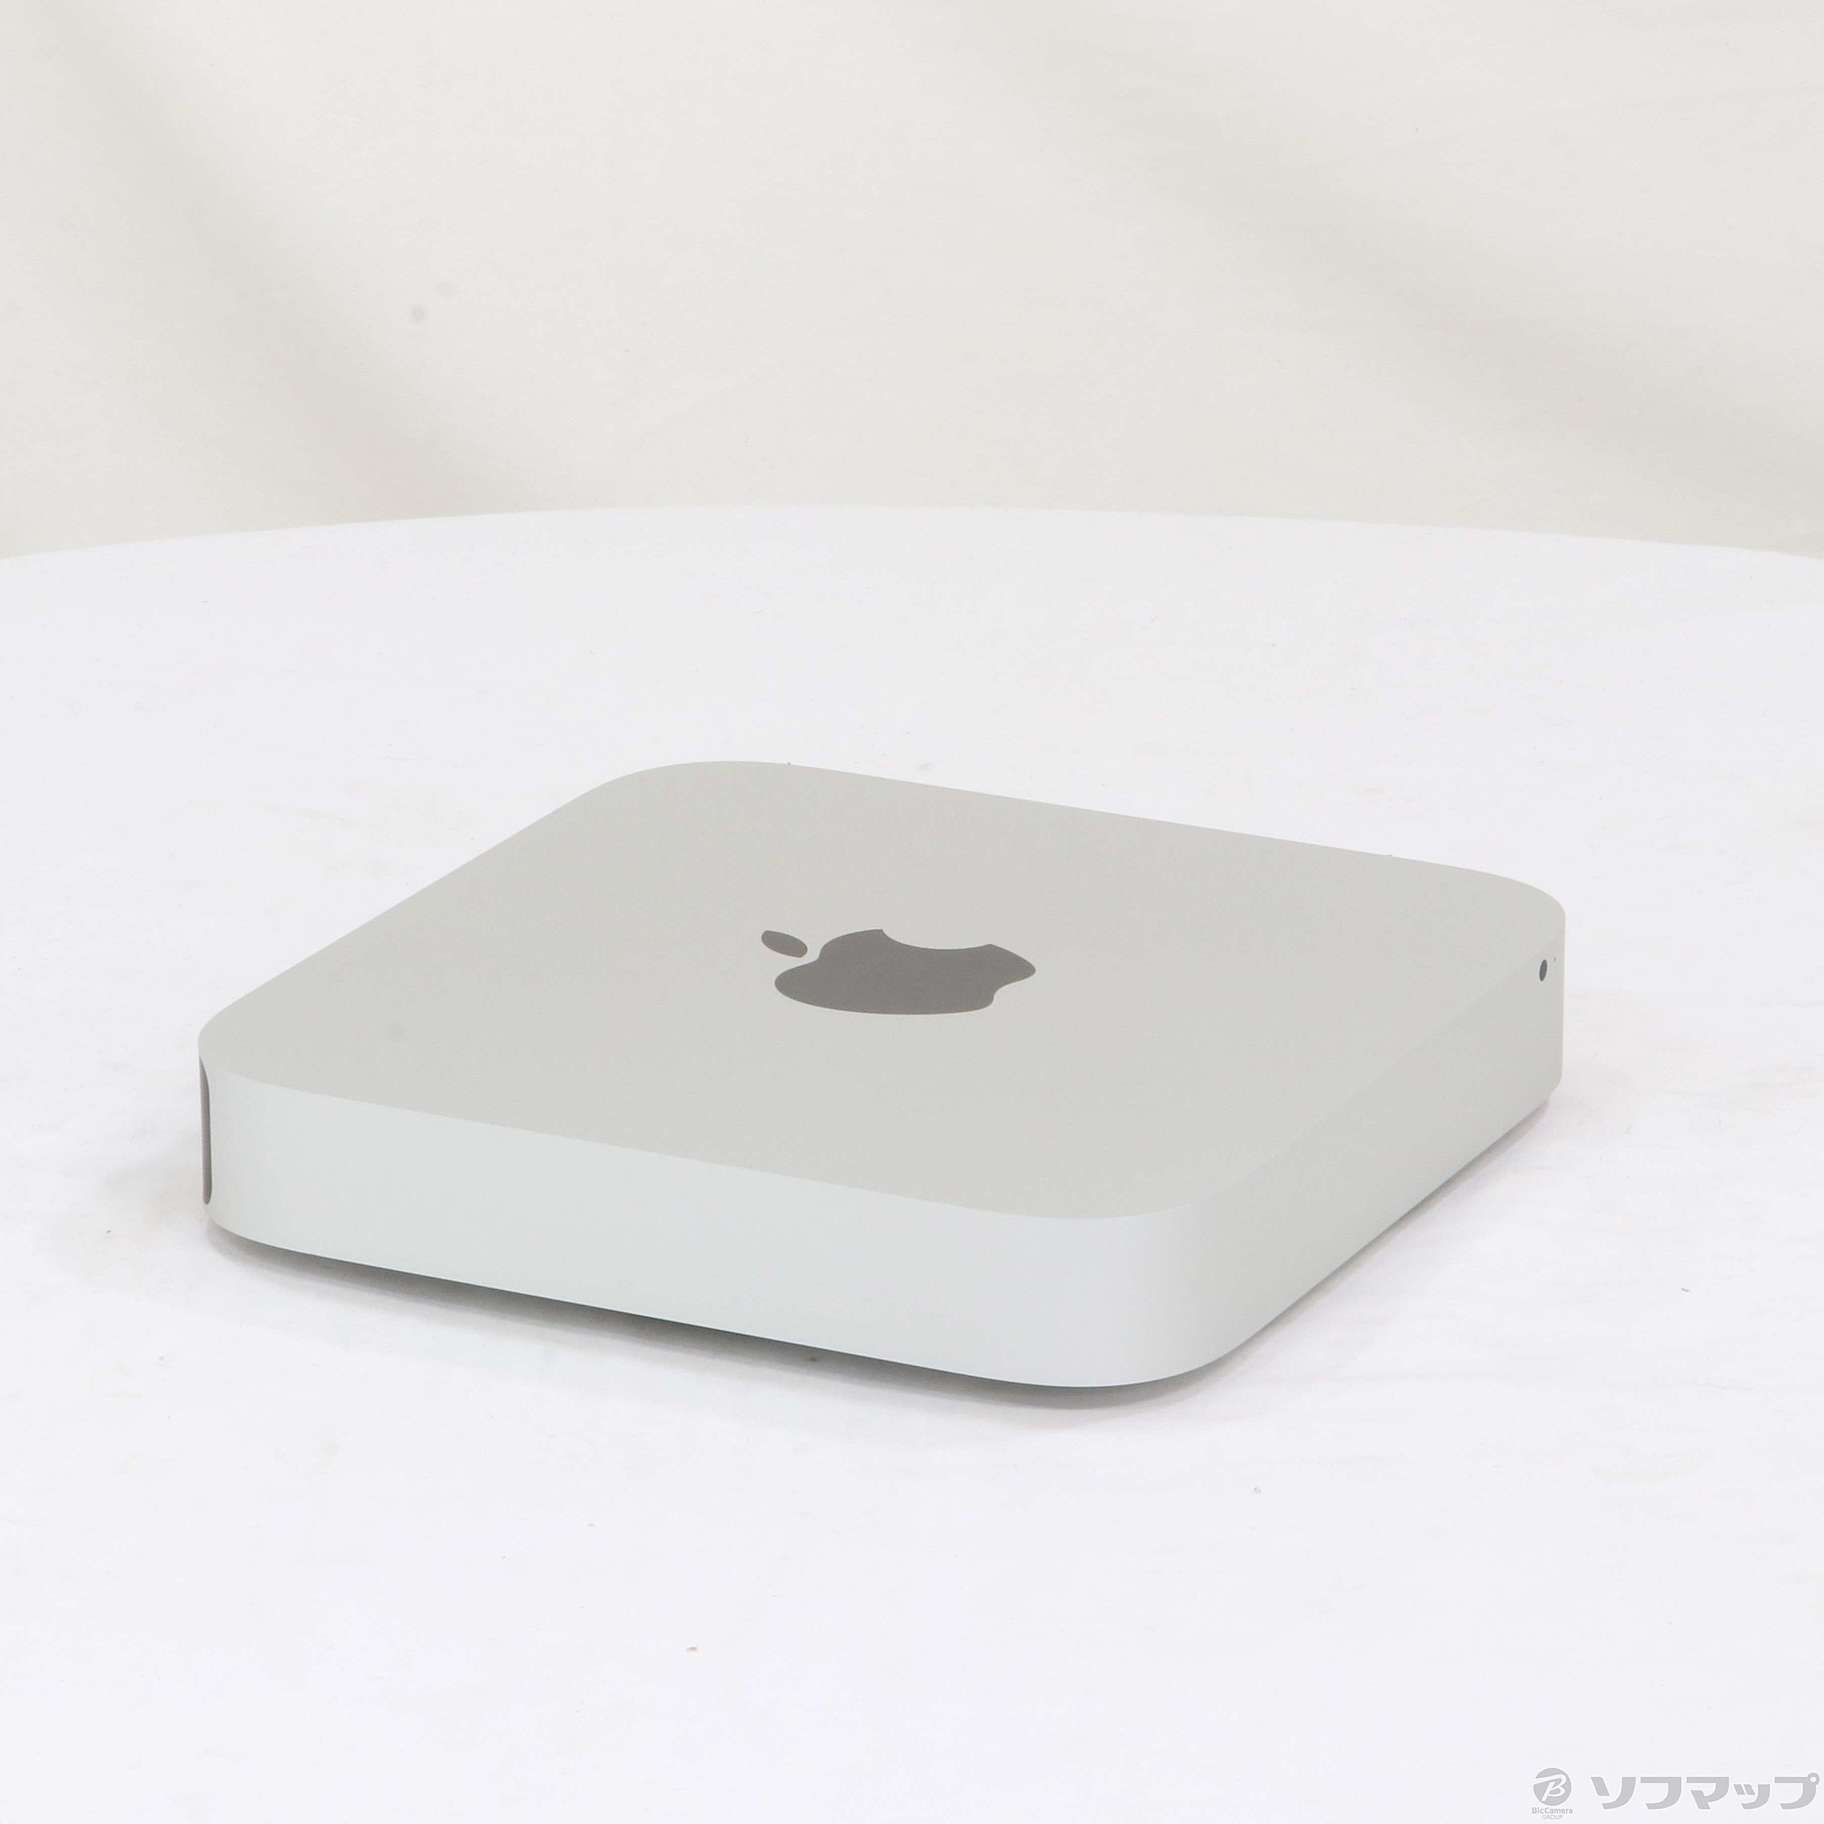 2011 i7 mac mini for sale